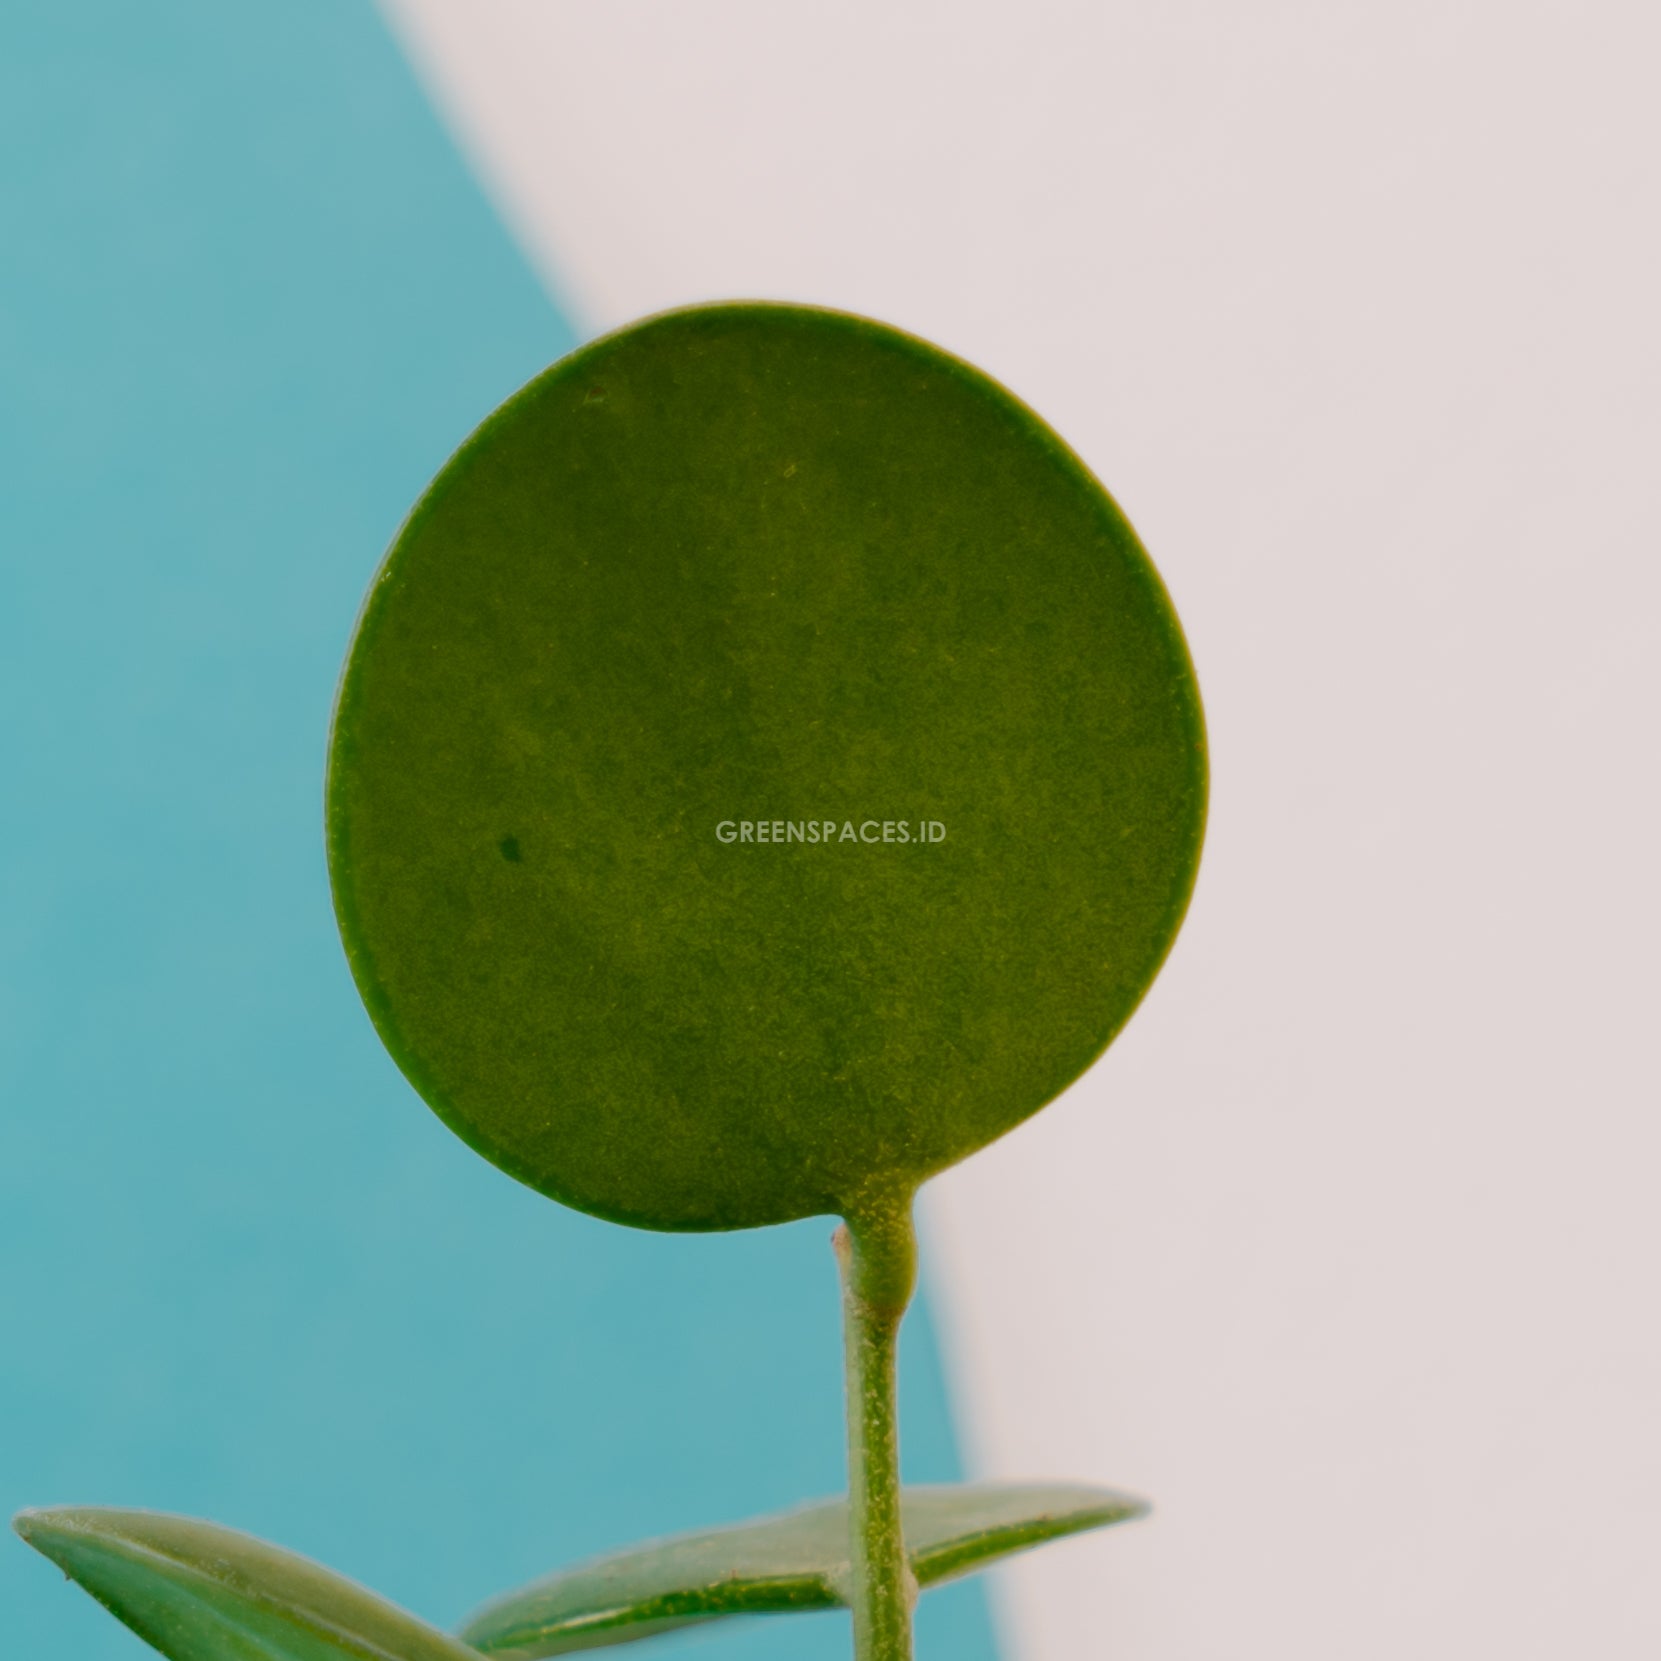 Hoya Coin - Greenspaces.id